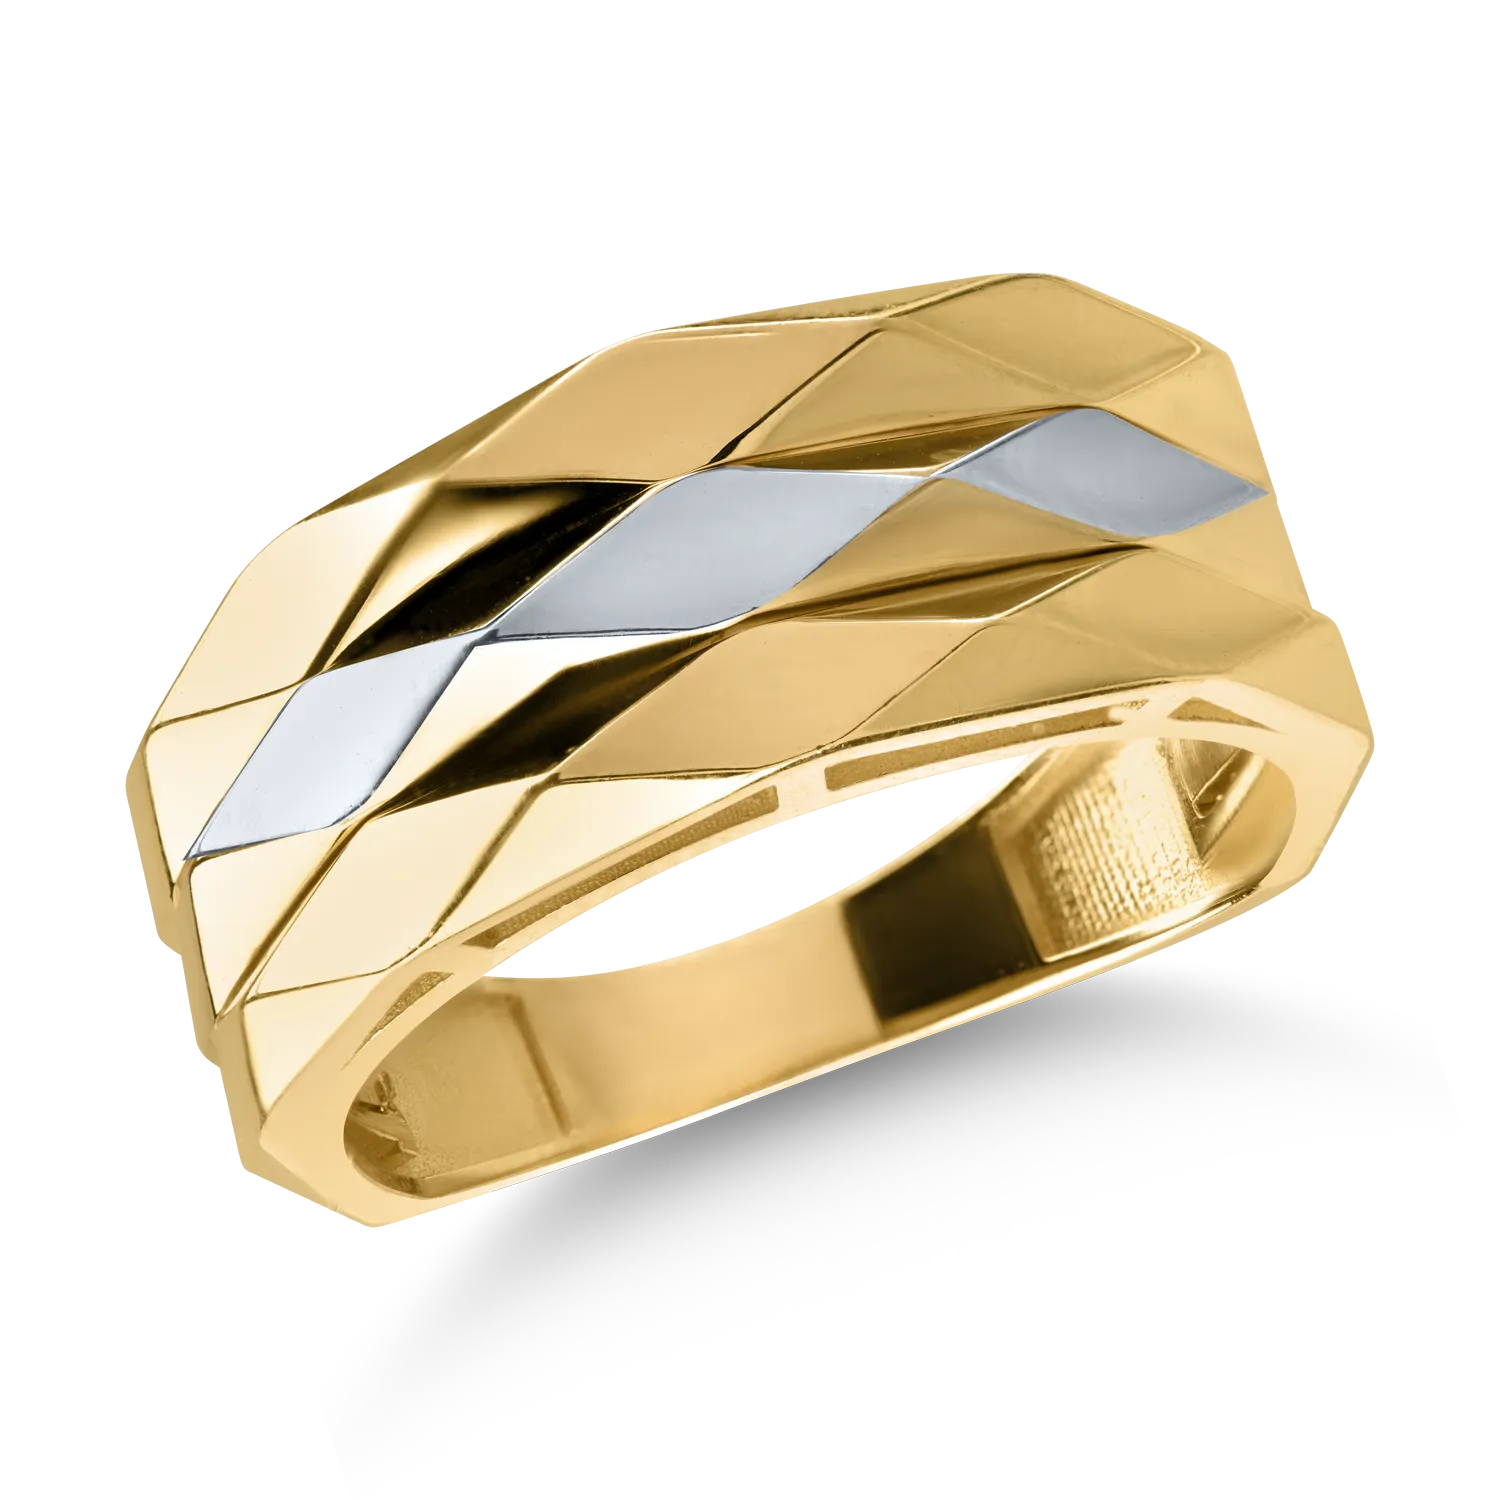 White-yellow gold ring